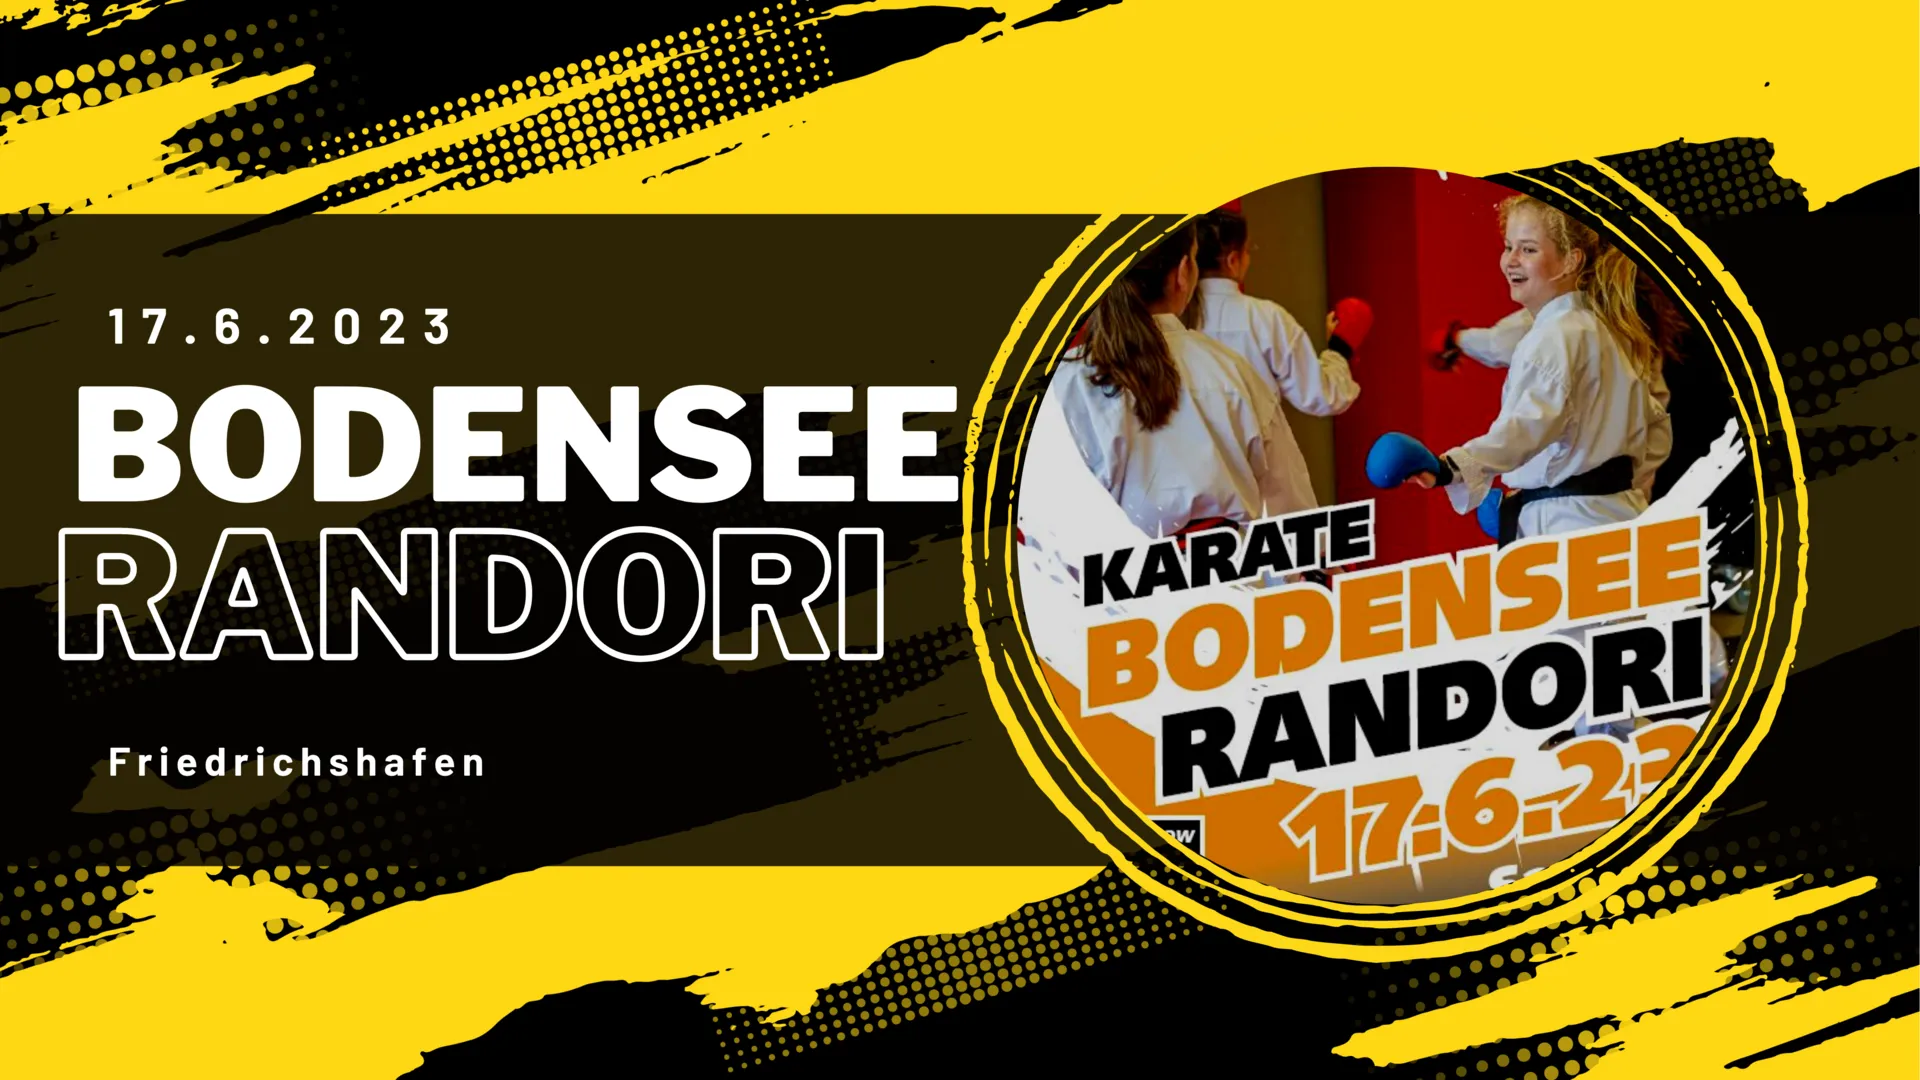 Karate Randori